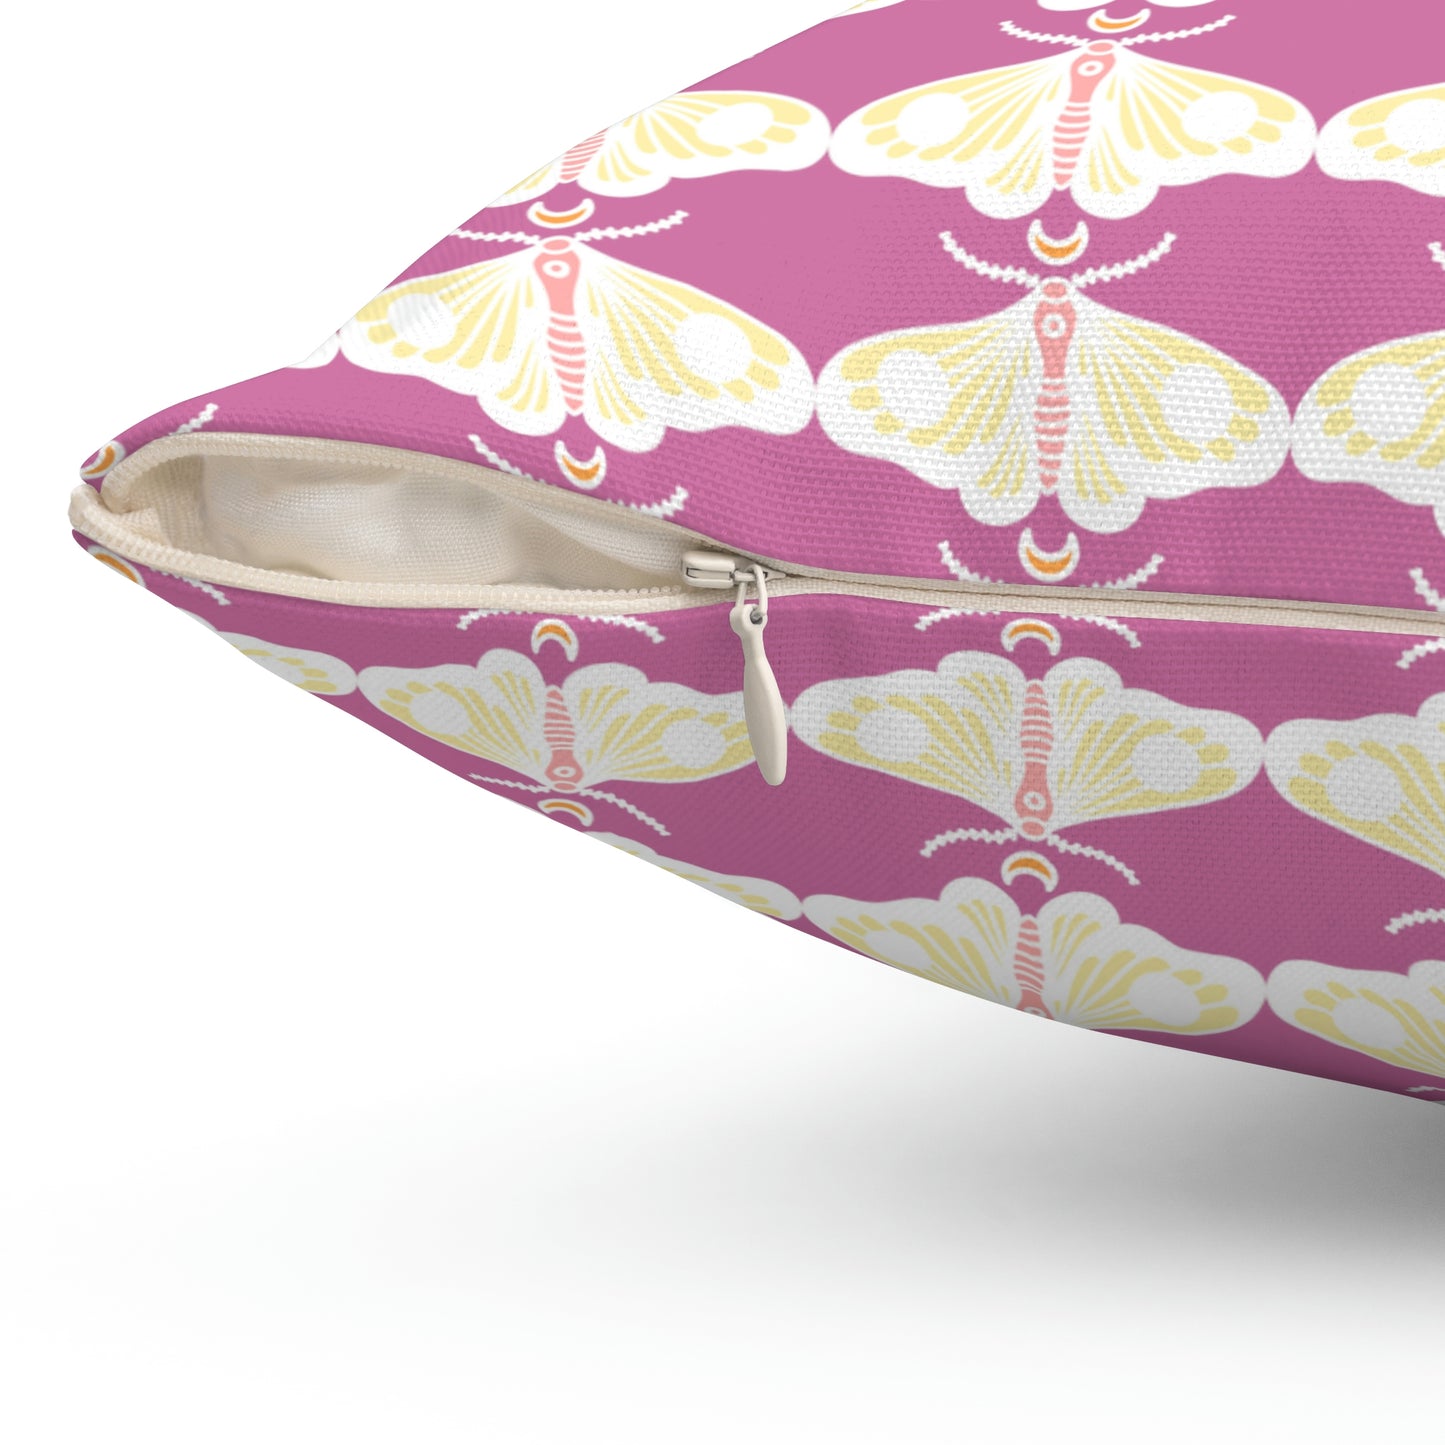 Spun Polyester Square Pillow Case “Moth White Pattern on Light Pink”